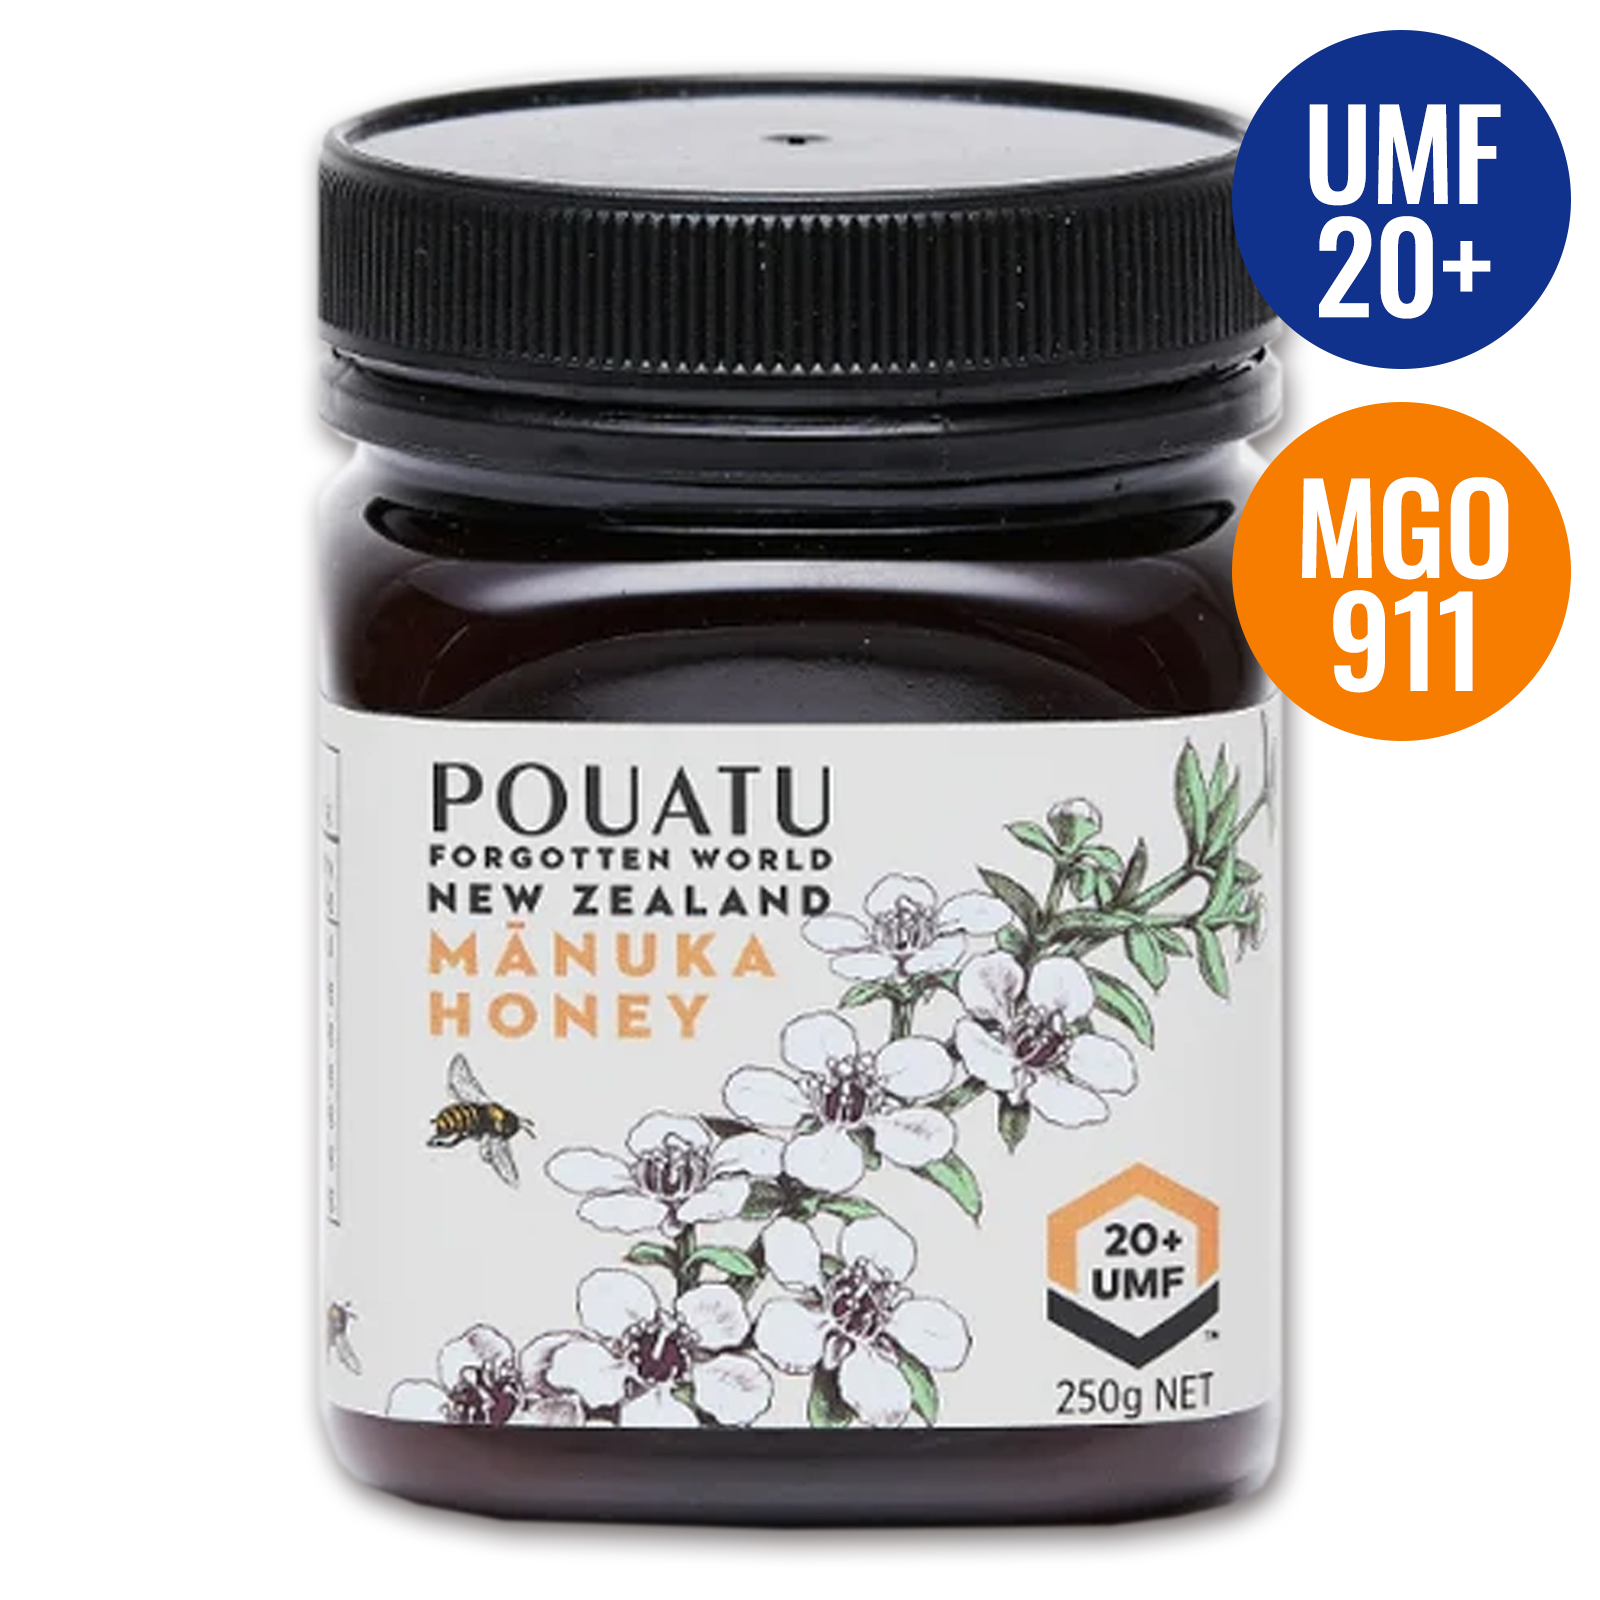 Premium All Natural Manuka Honey UMF20+ MGO911 from New Zealand (250g) - Horizon Farms